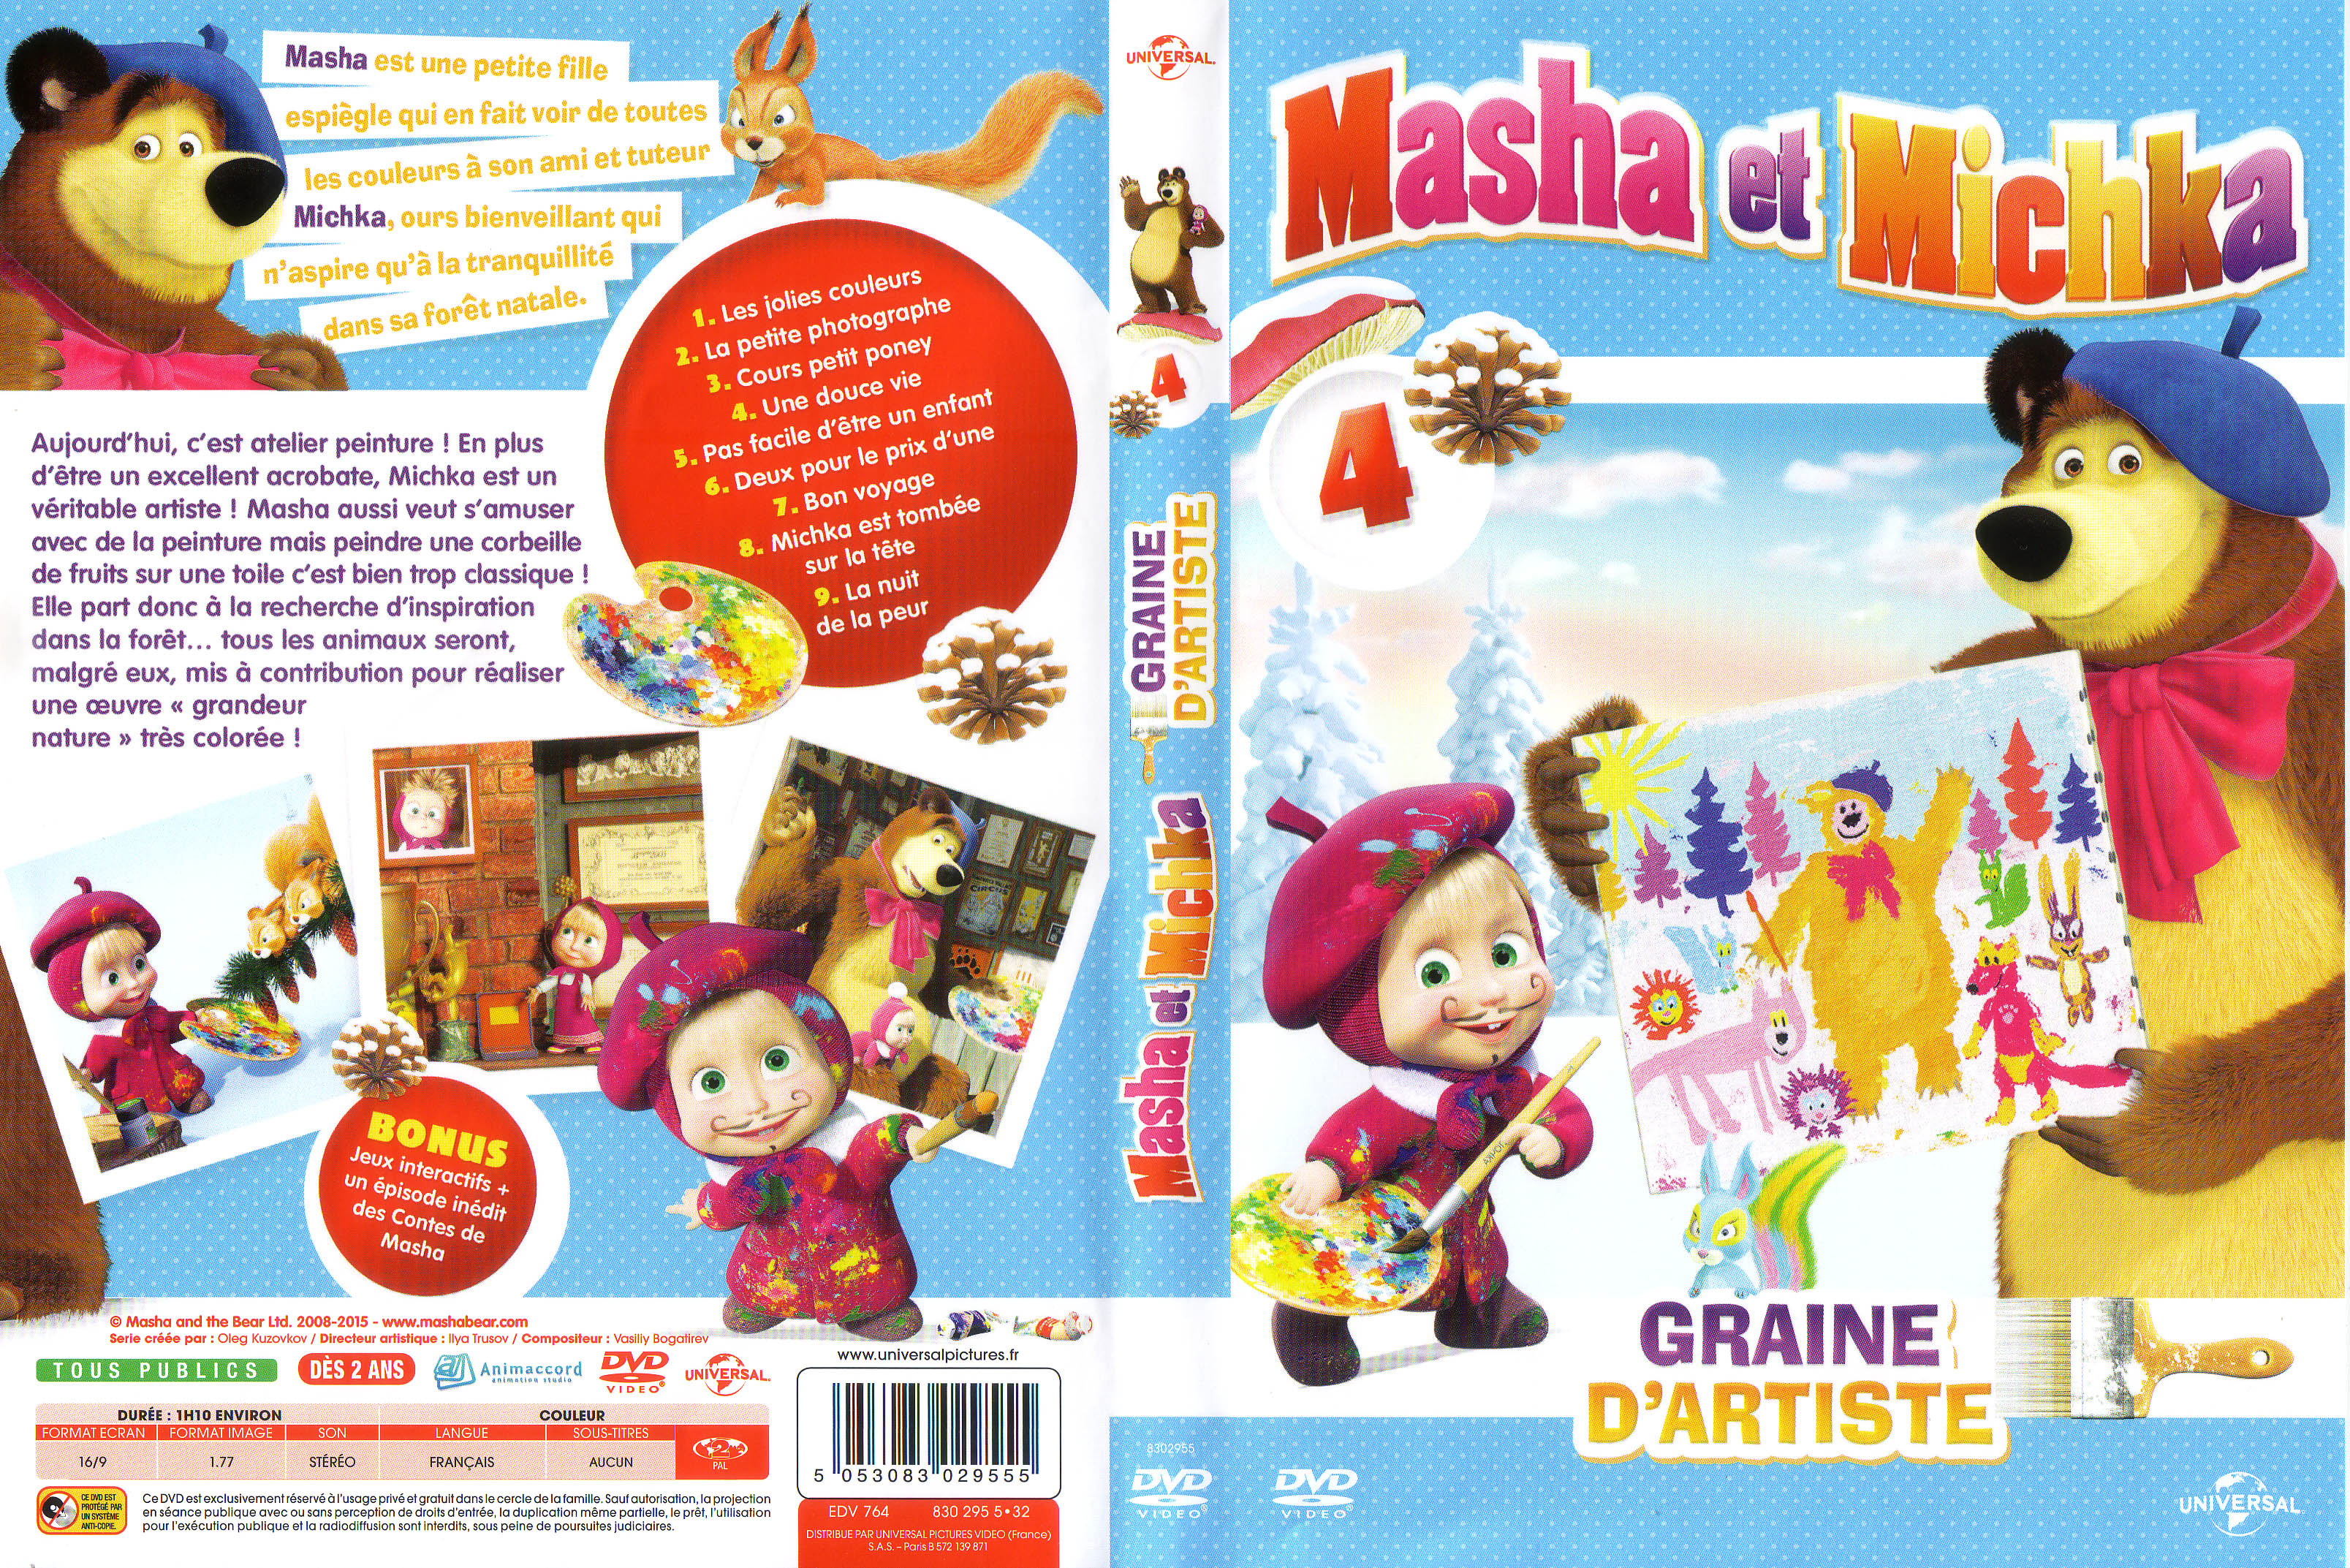 Jaquette DVD Masha et Michka -Volume 4 - Graine d